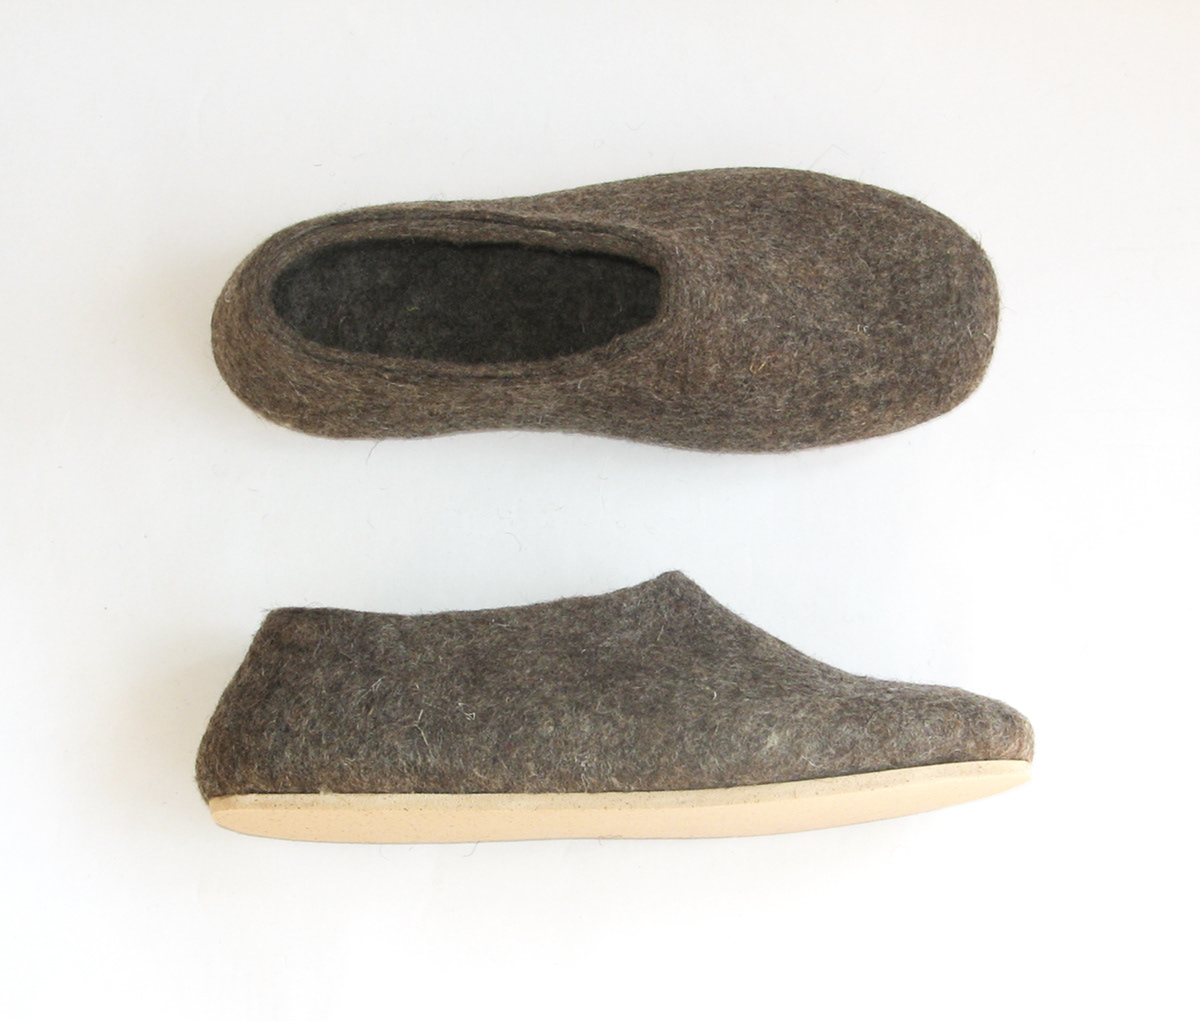 handmade shoes  wool  felting  natural  design  eco friendly  ecological  cork  footwear  custom made  shoes  slippers  FLATS  ballet design